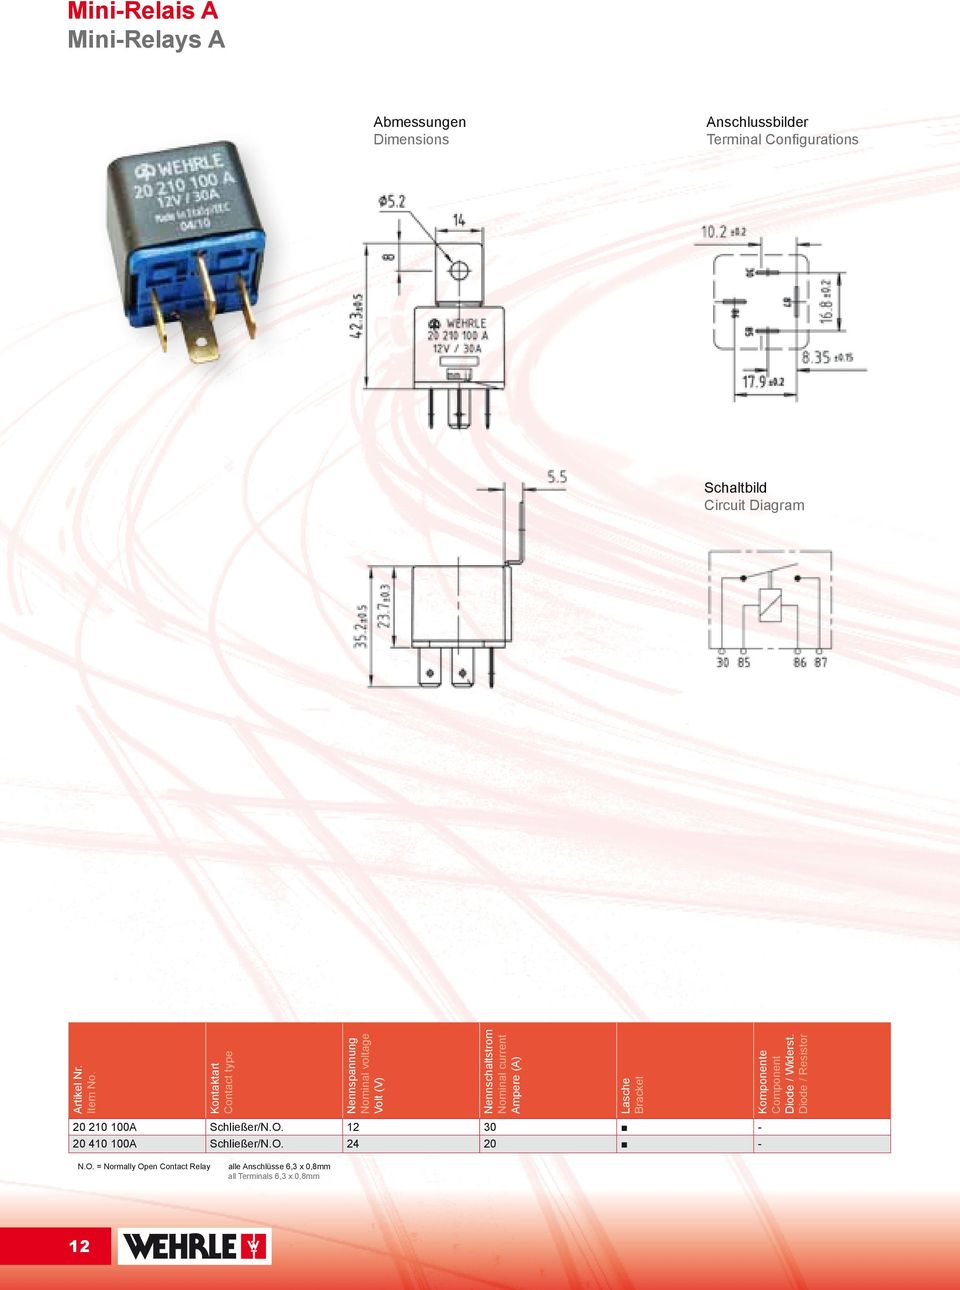 Kontaktart Contact type Nennspannung Nominal voltage Volt (V) Nennschaltstrom Nominal current Ampere (A) 20 210 100A